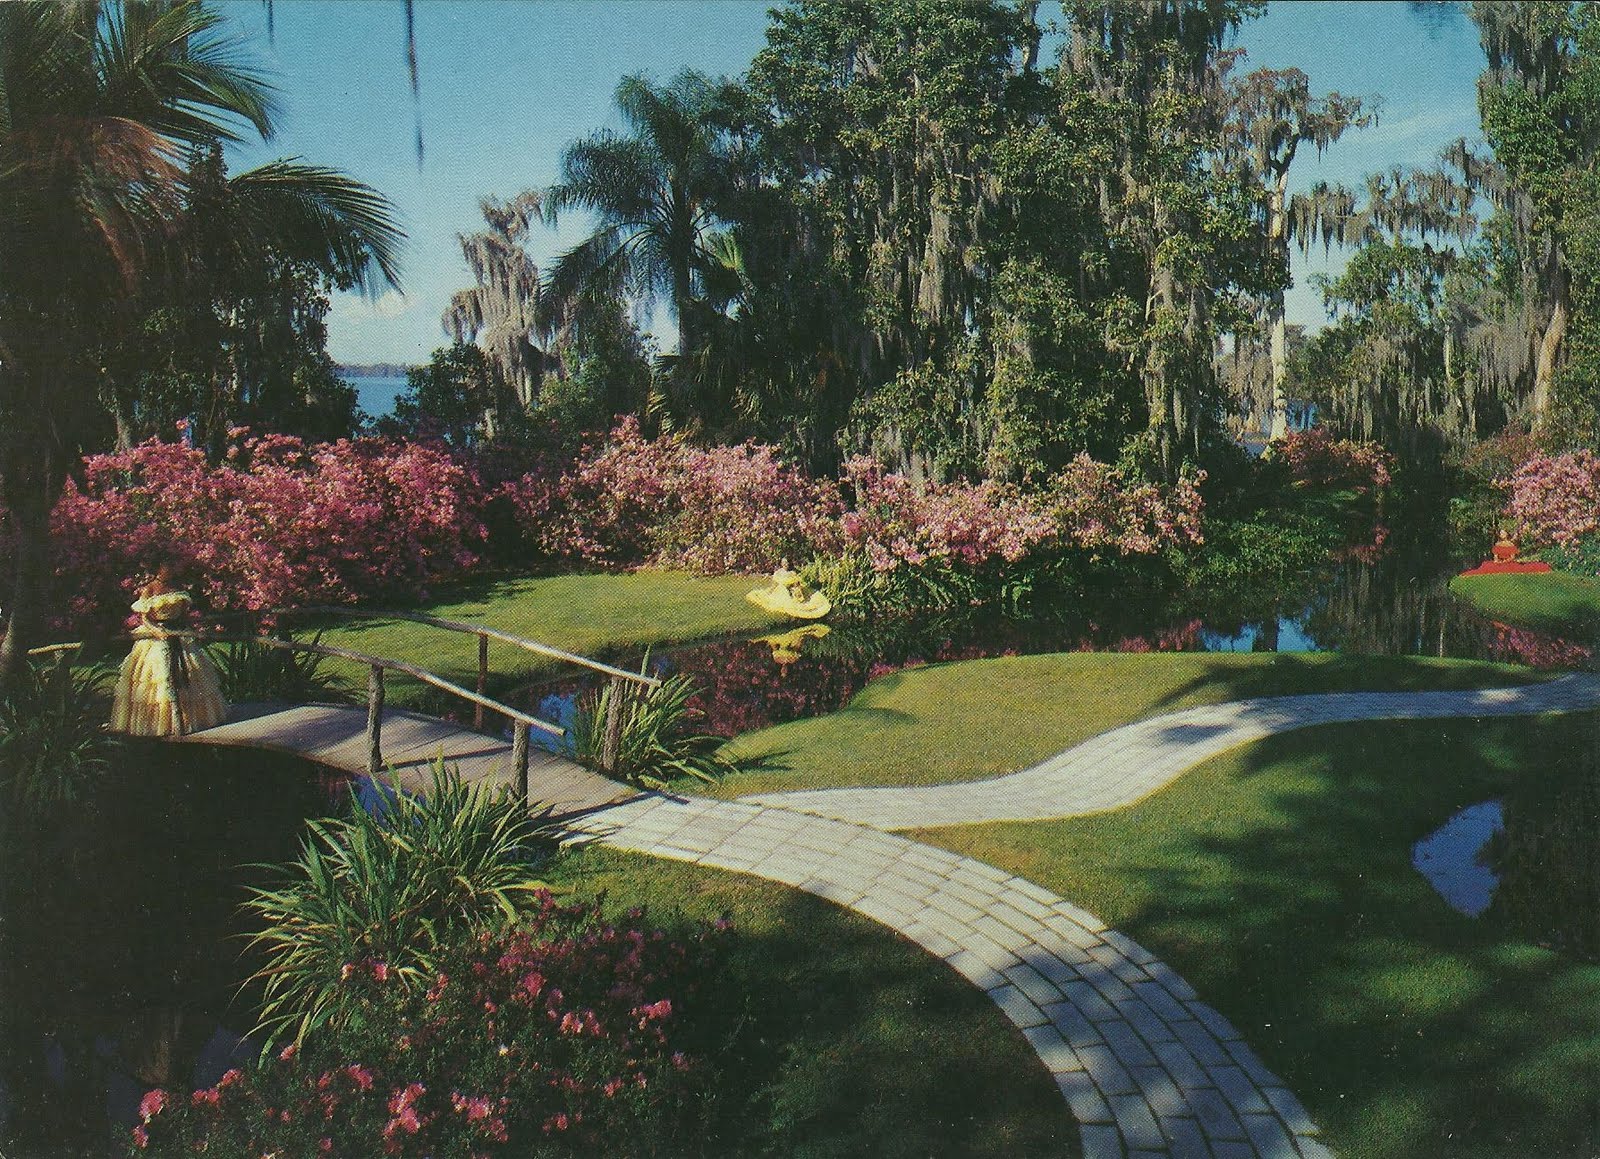 Vintage Travel Postcards: Cypress Gardens